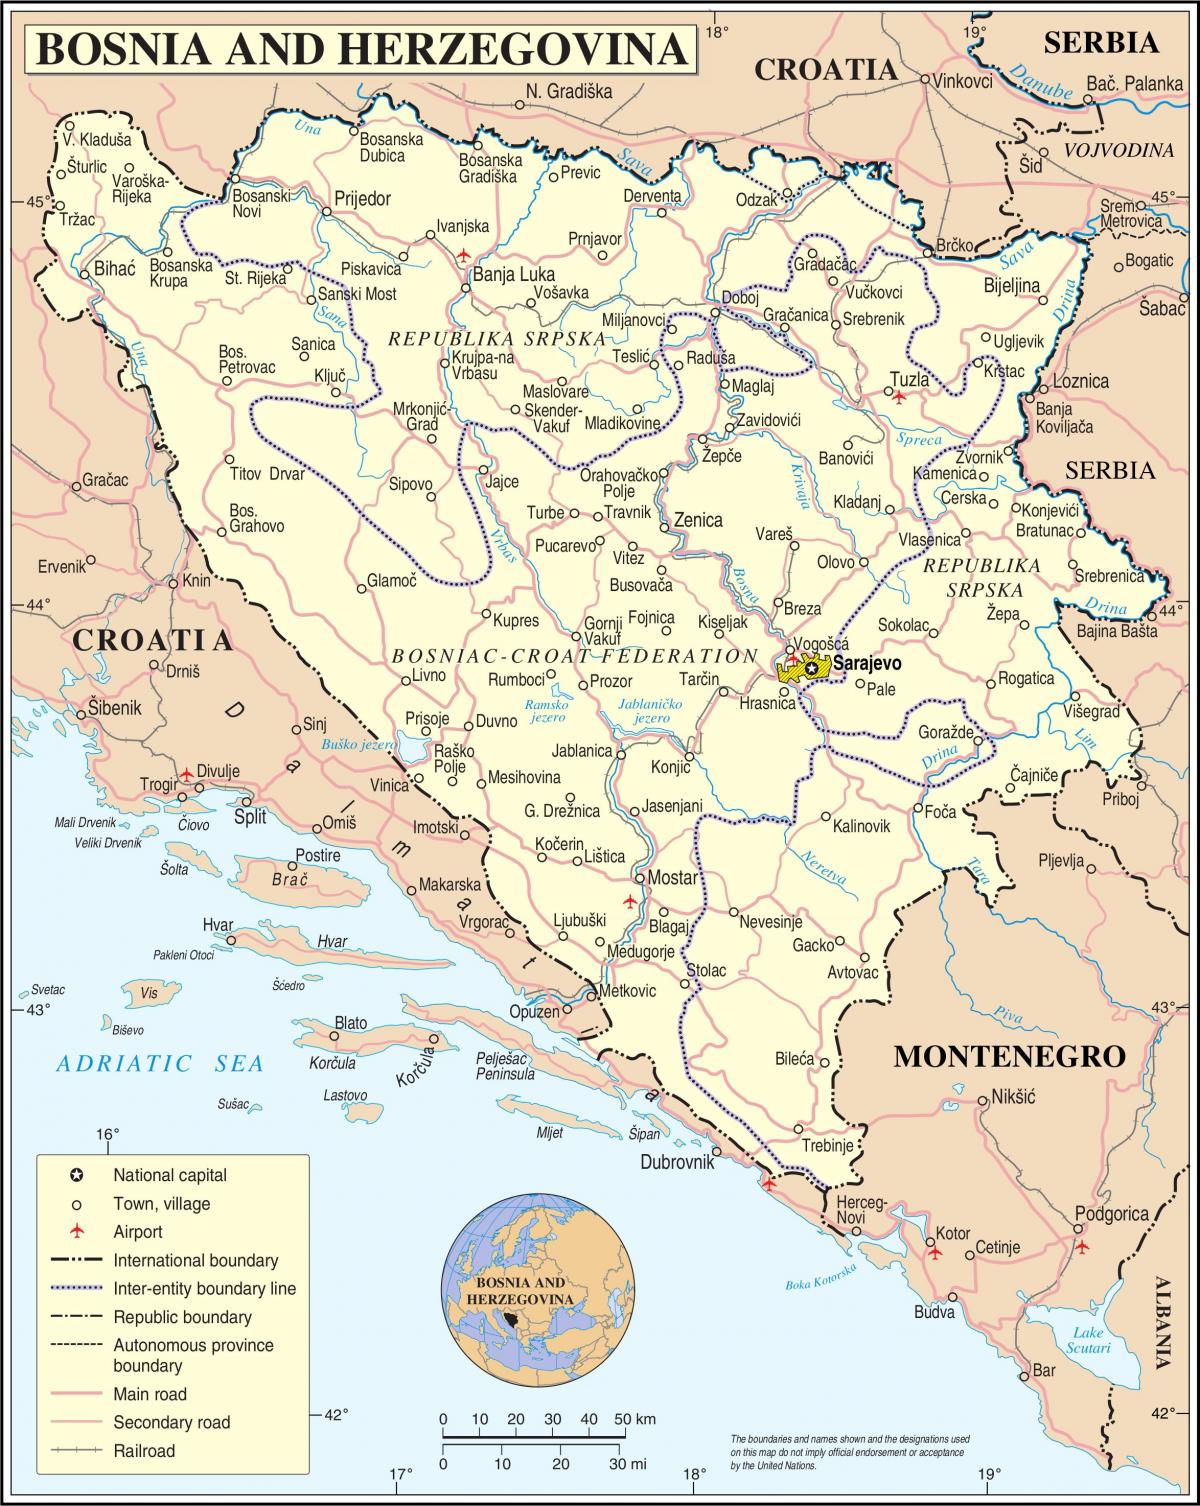 Kart over Bosnia turist